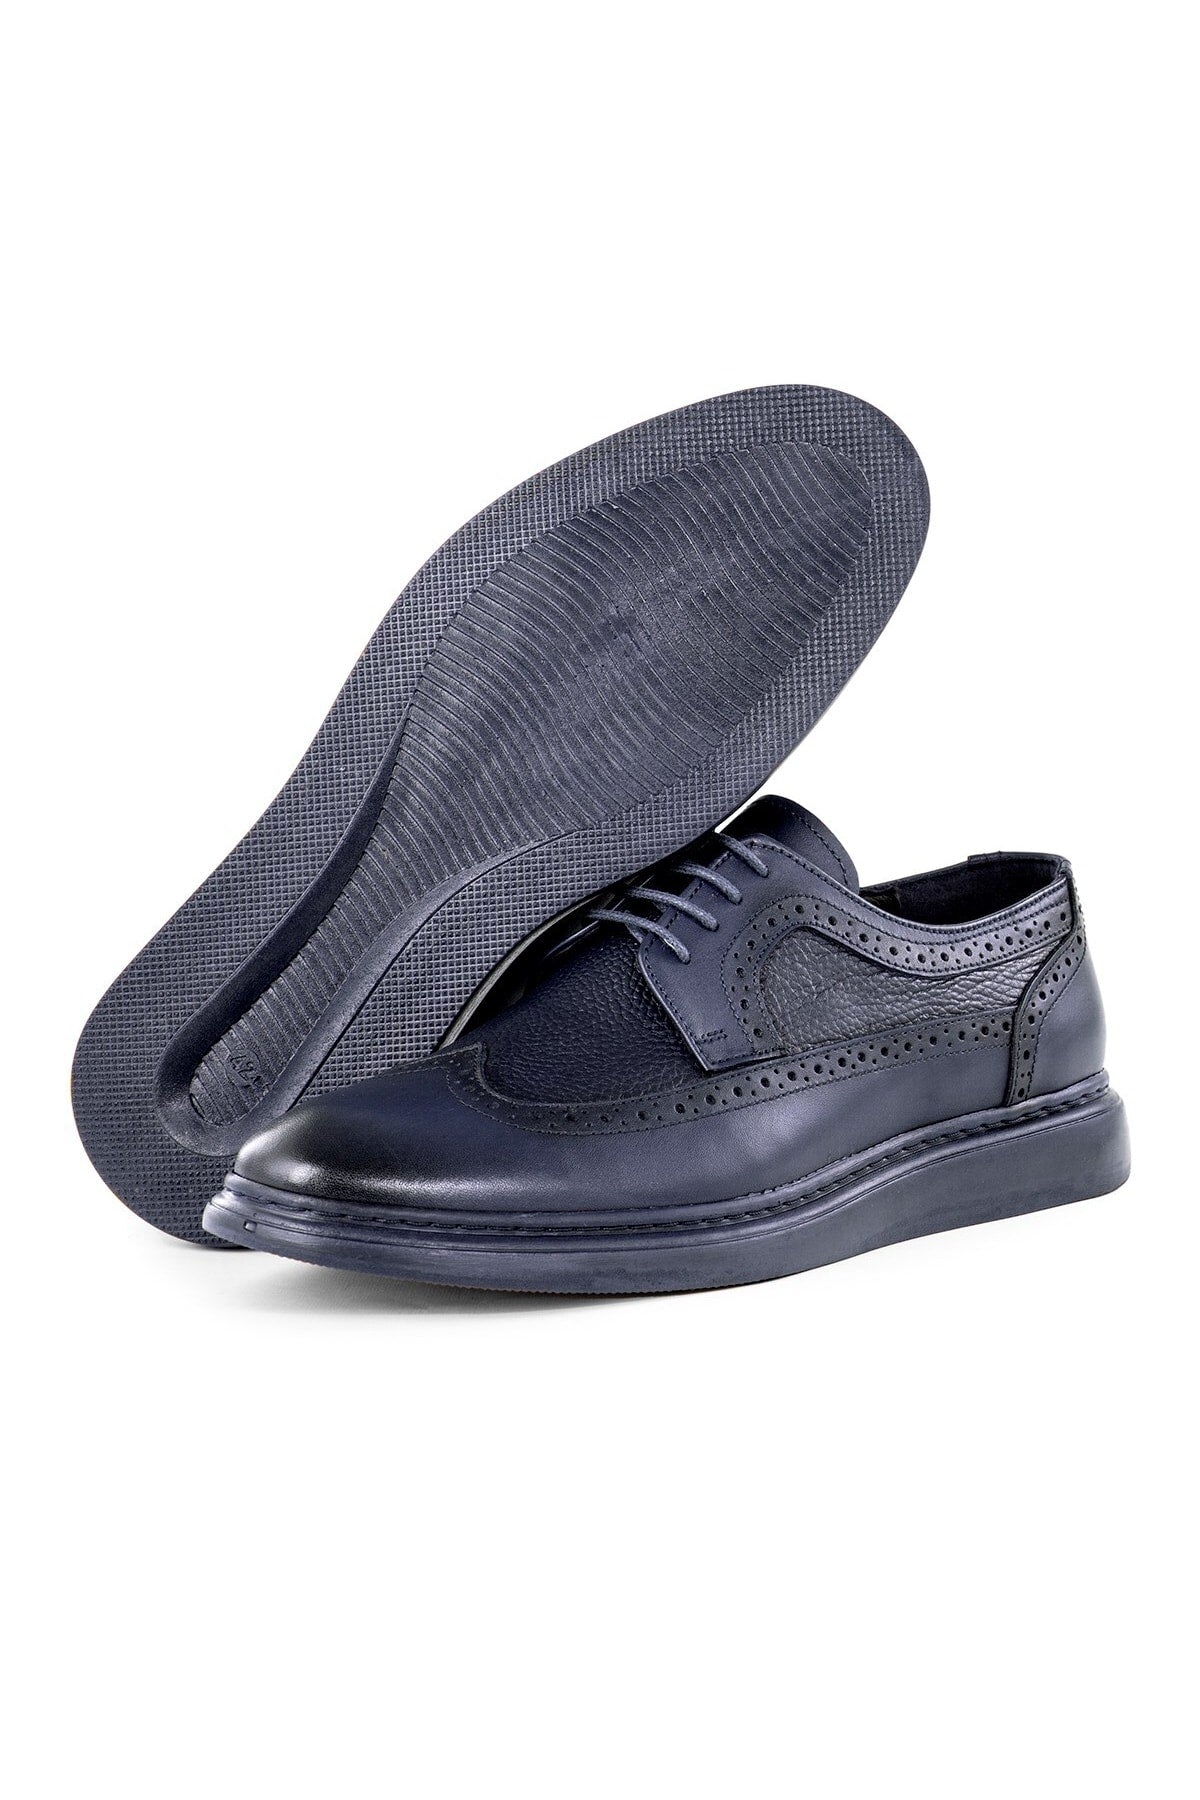 Lusso Genuine Leather Men's Casual Classic Shoes, Genuine Leather Classic Shoes, Derby Classic